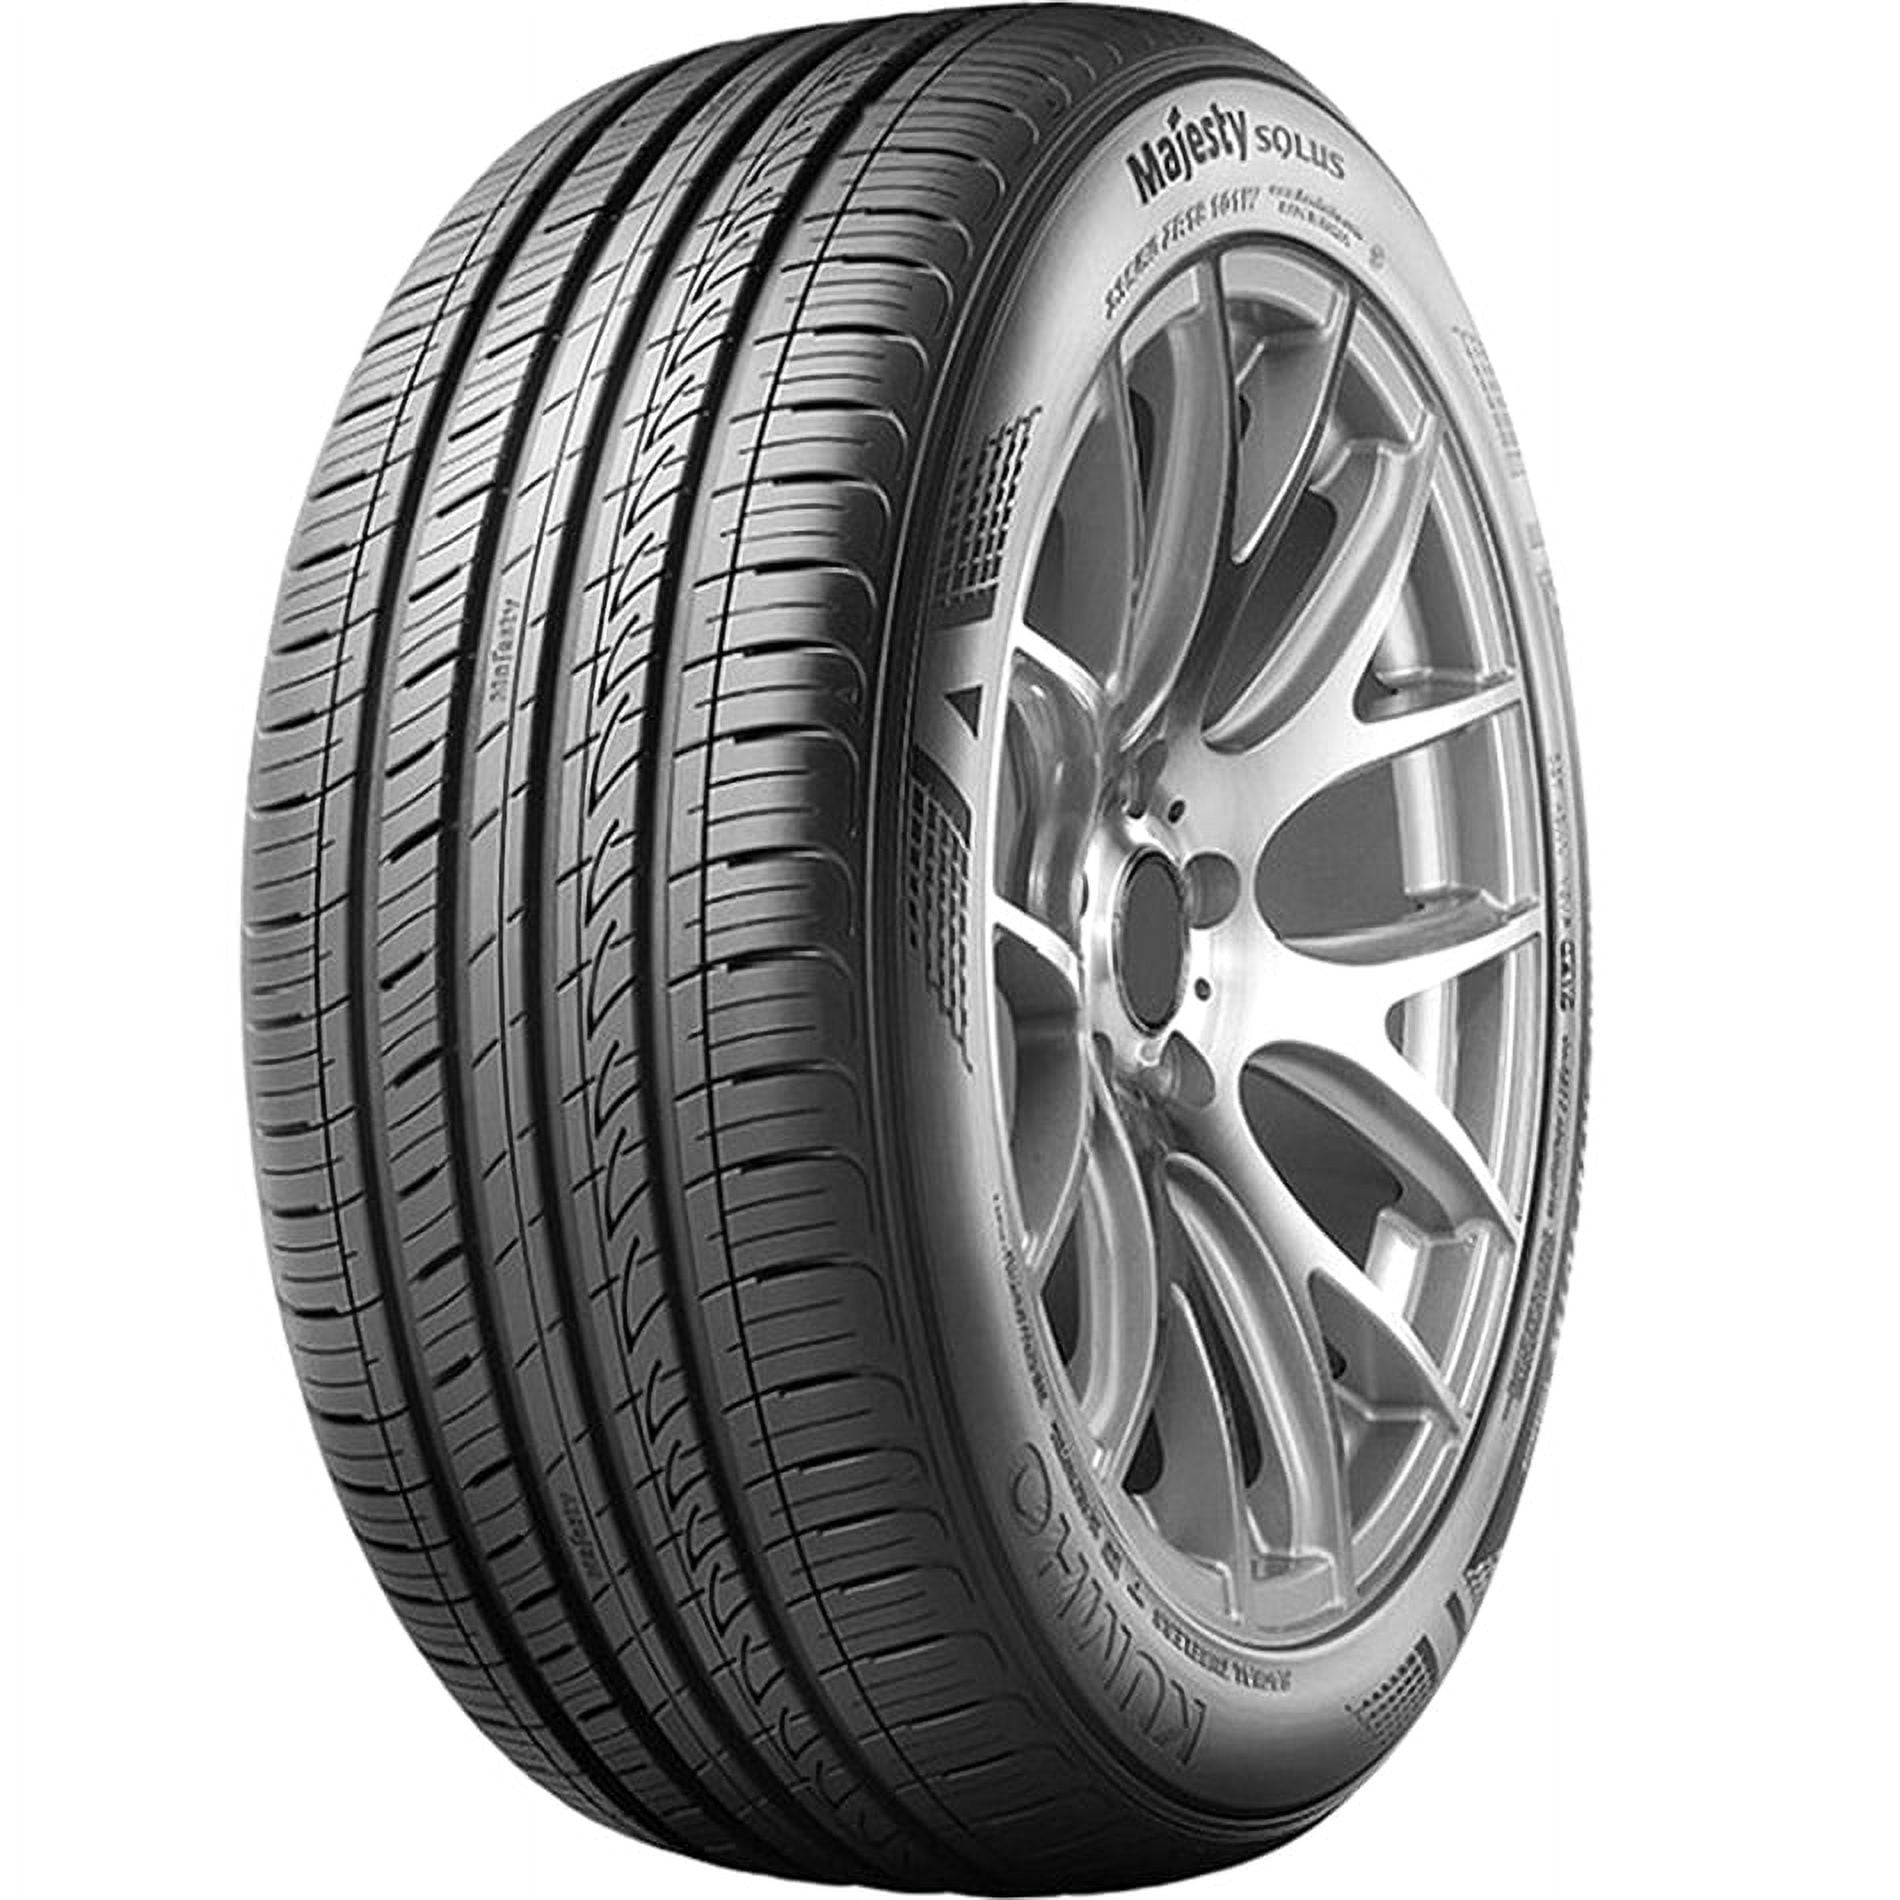 Solus High A/S Tire Kumho 225/45R17 Performance 91W Majesty